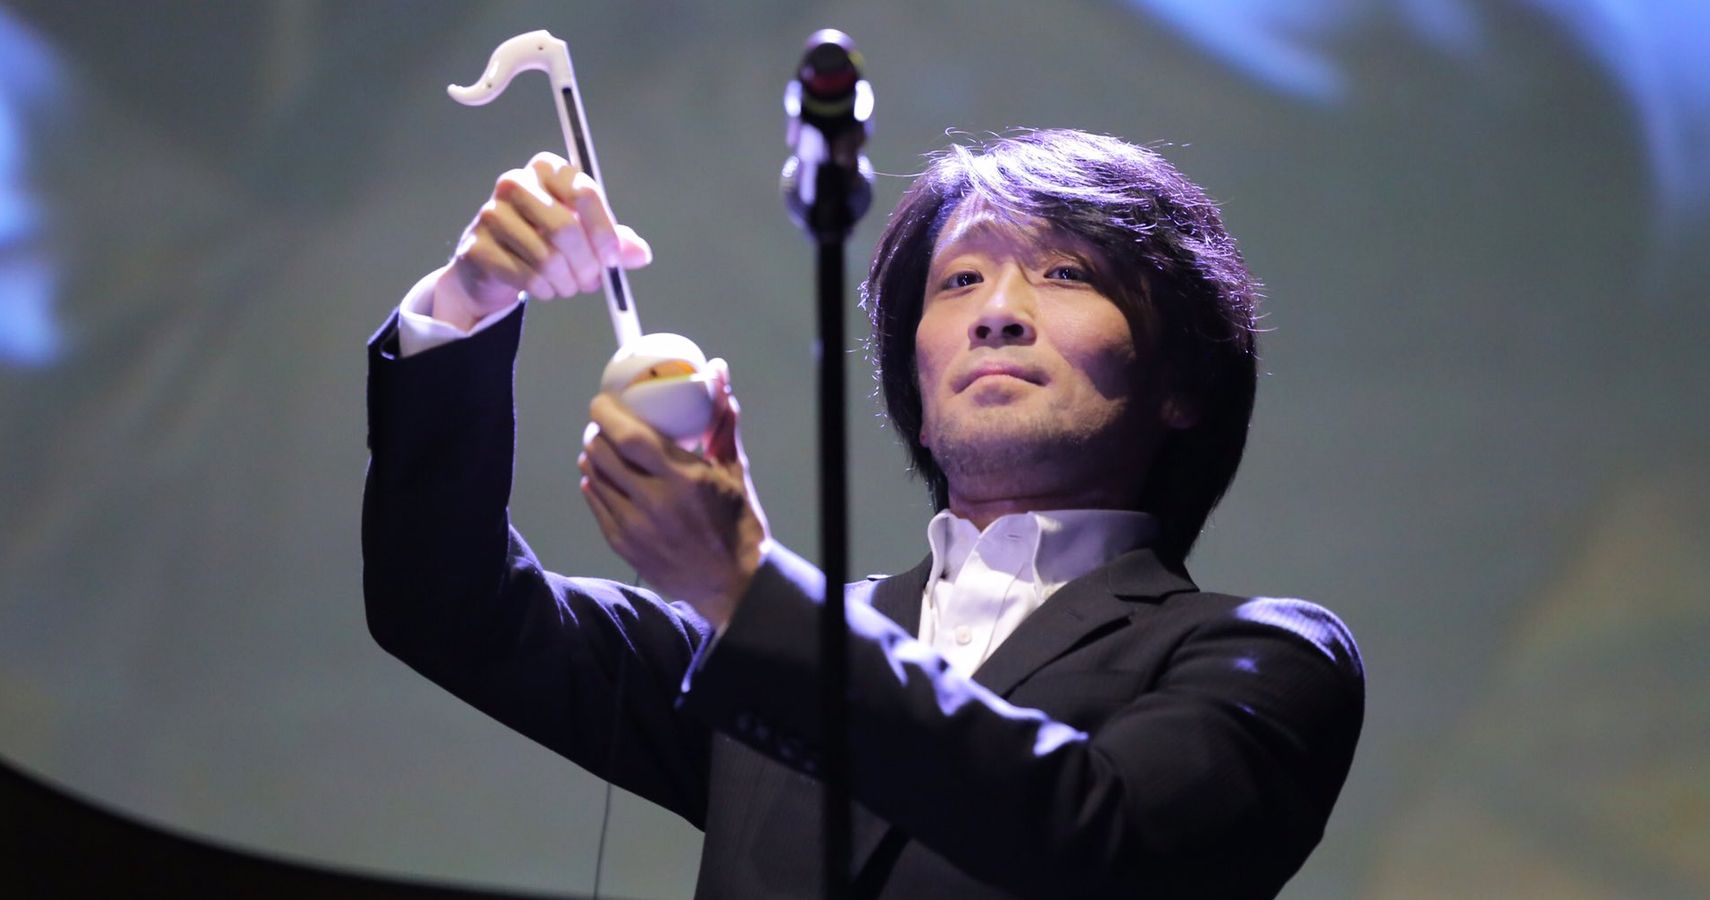 Final Fantasy 14 lead composer and sound director, Masayoshi Soken